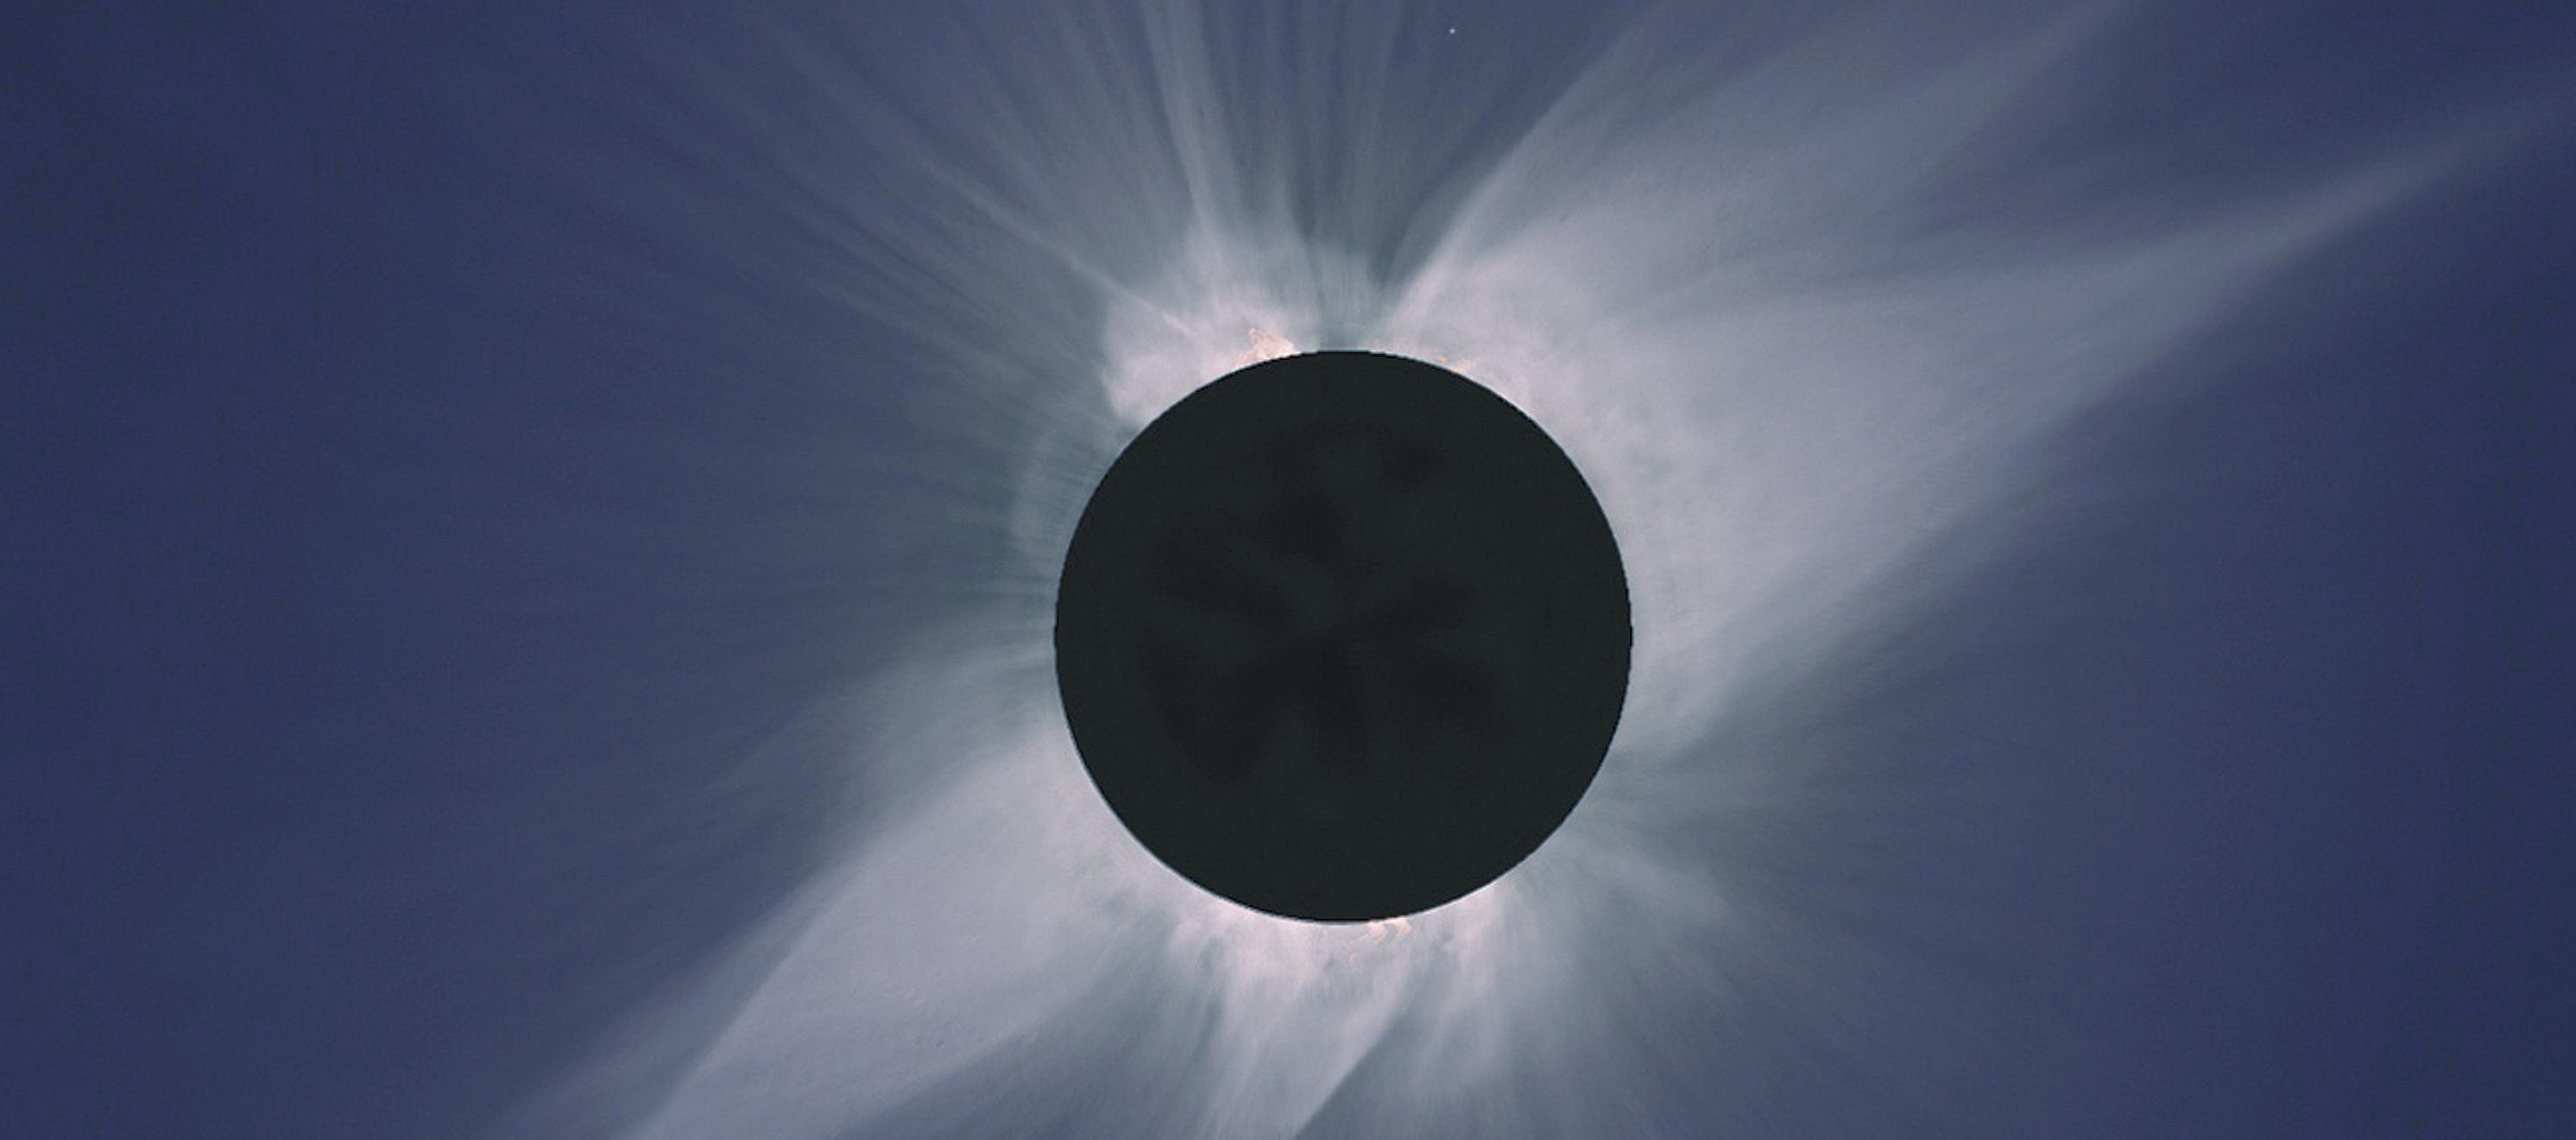 NASA-solar-eclipse-925705-edited.jpg